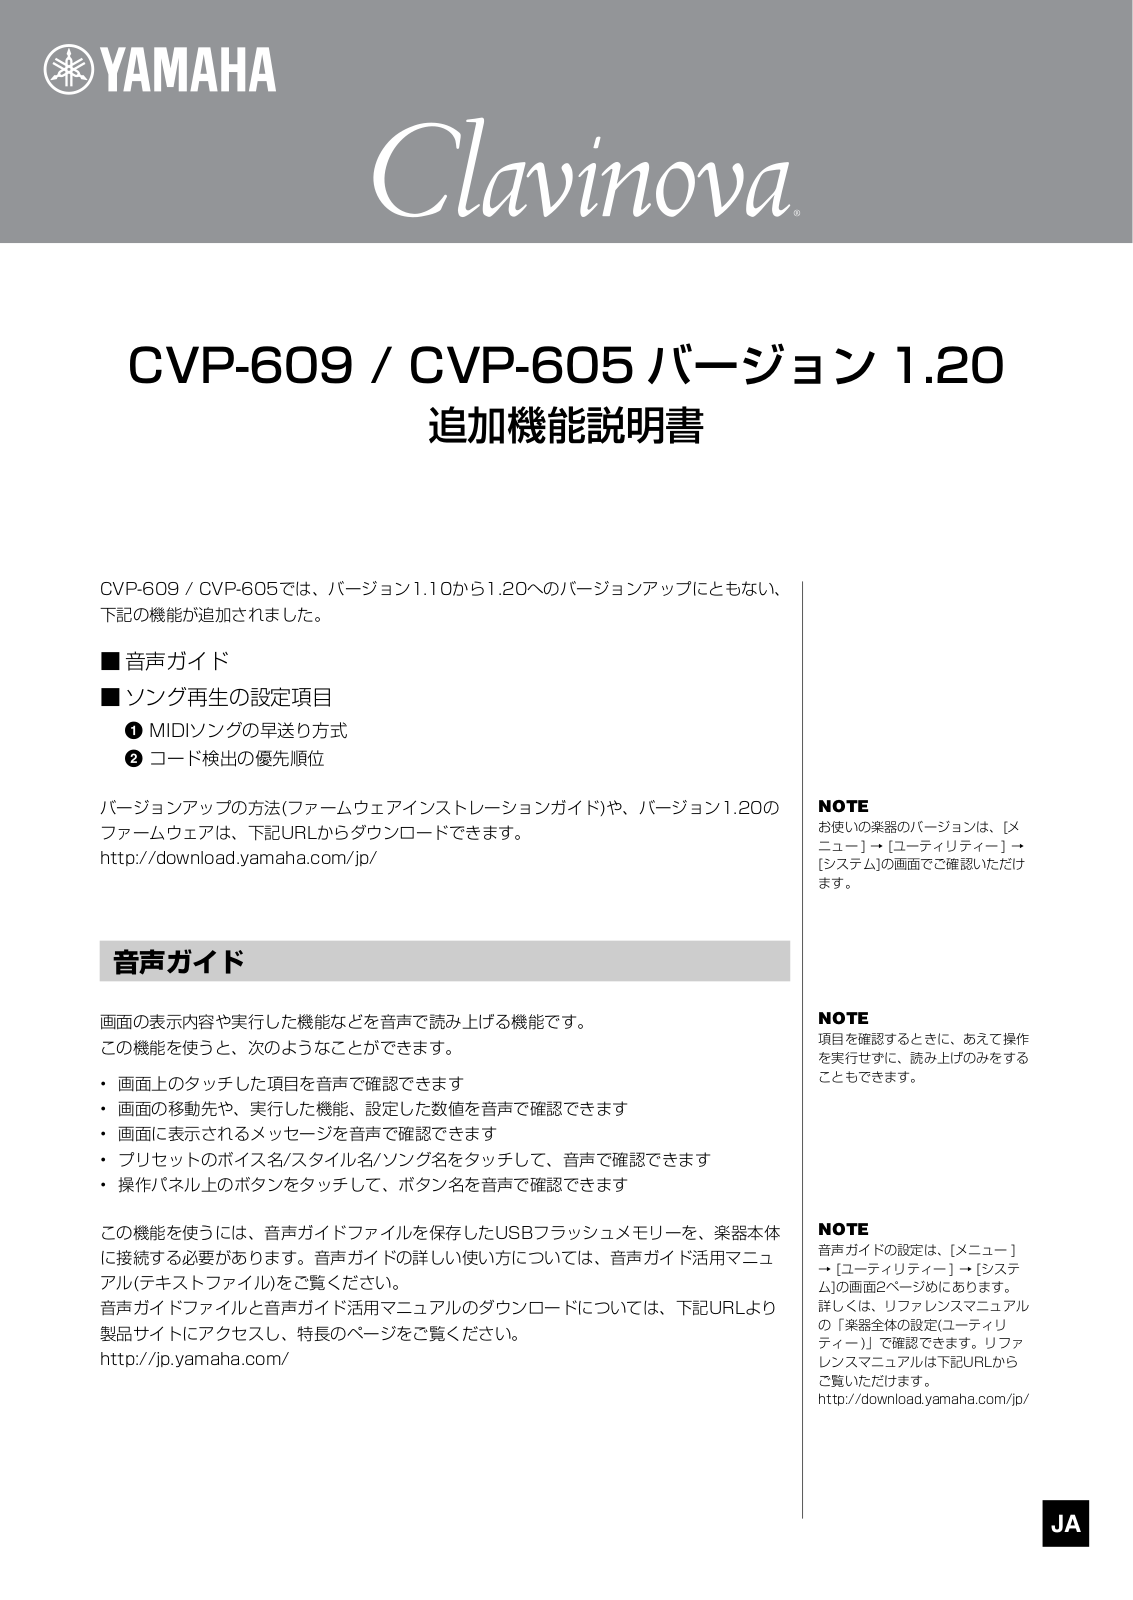 Yamaha CVP-609, CVP-605 VERSION 1.20 NEW FUNCTIONS